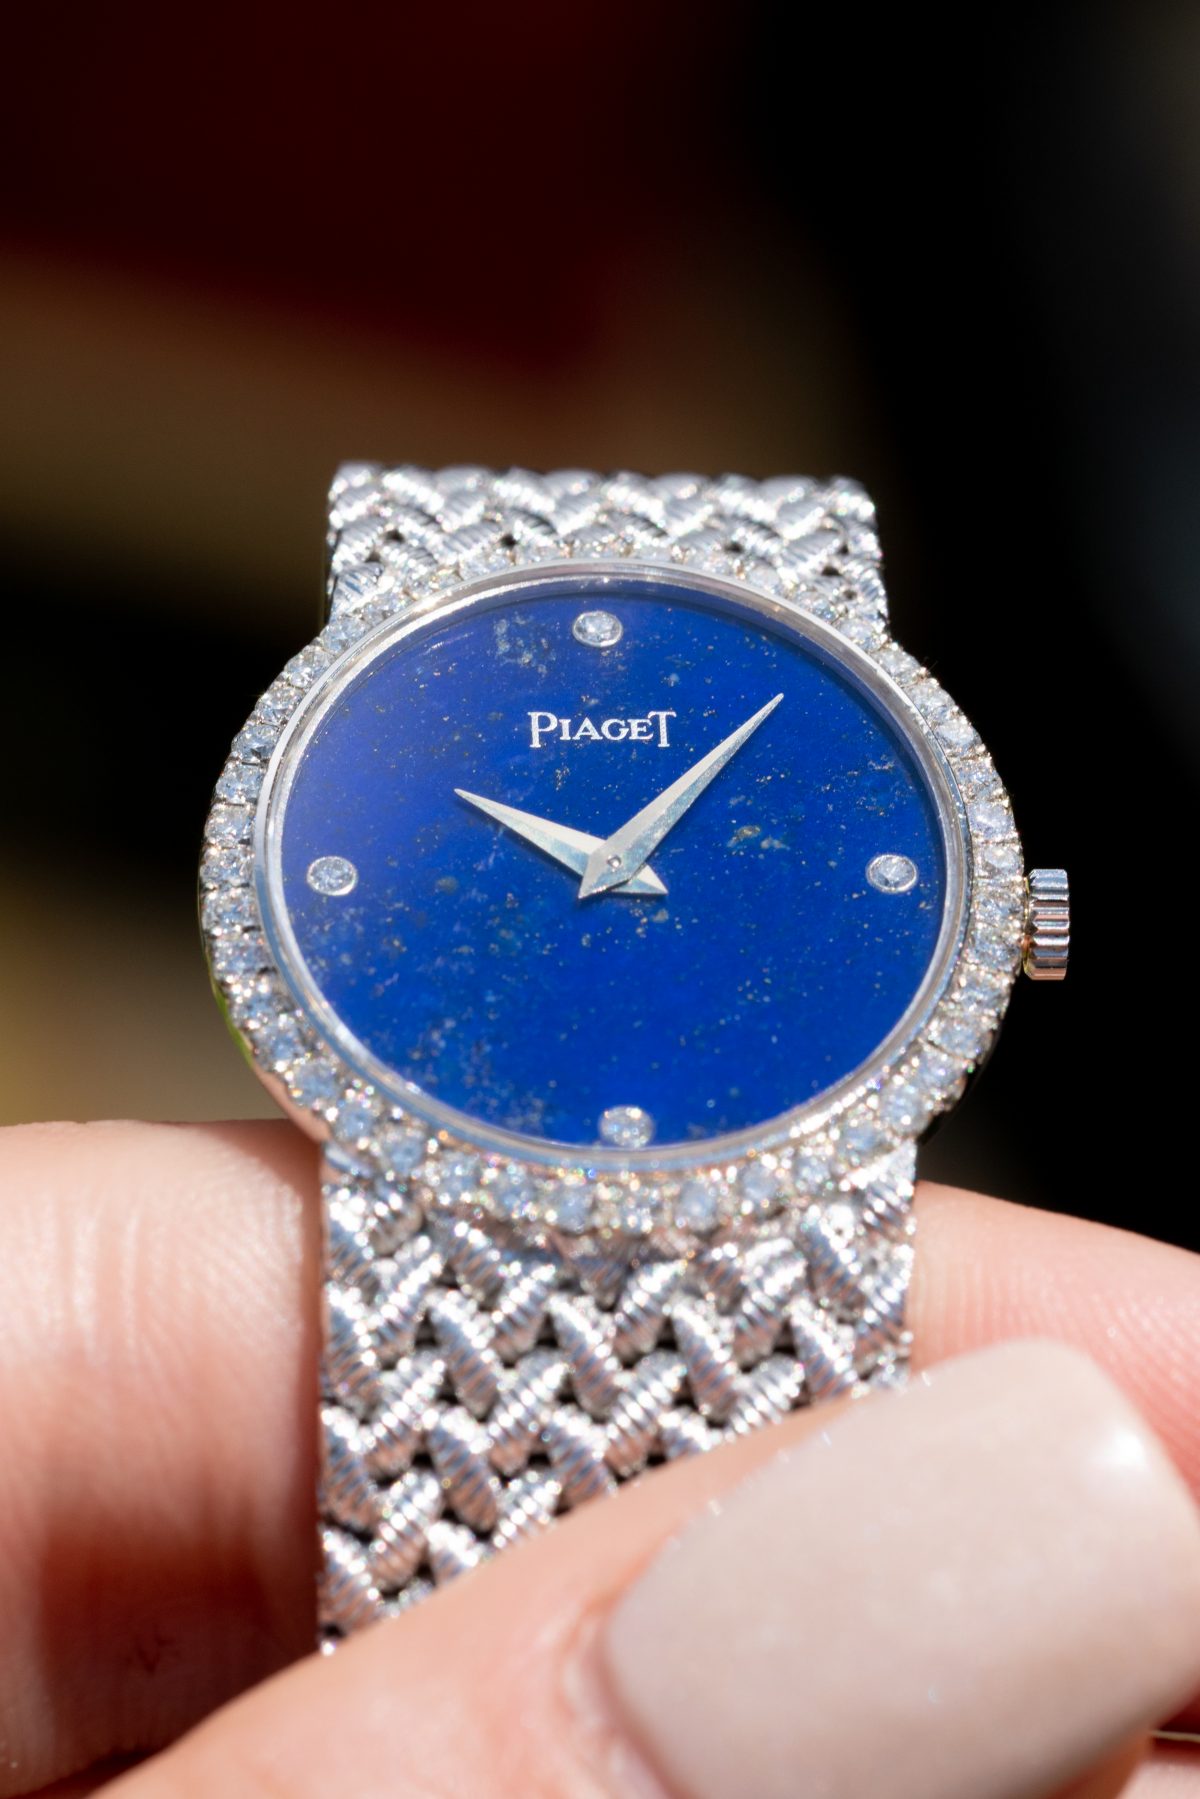 Piaget lapis dial watches